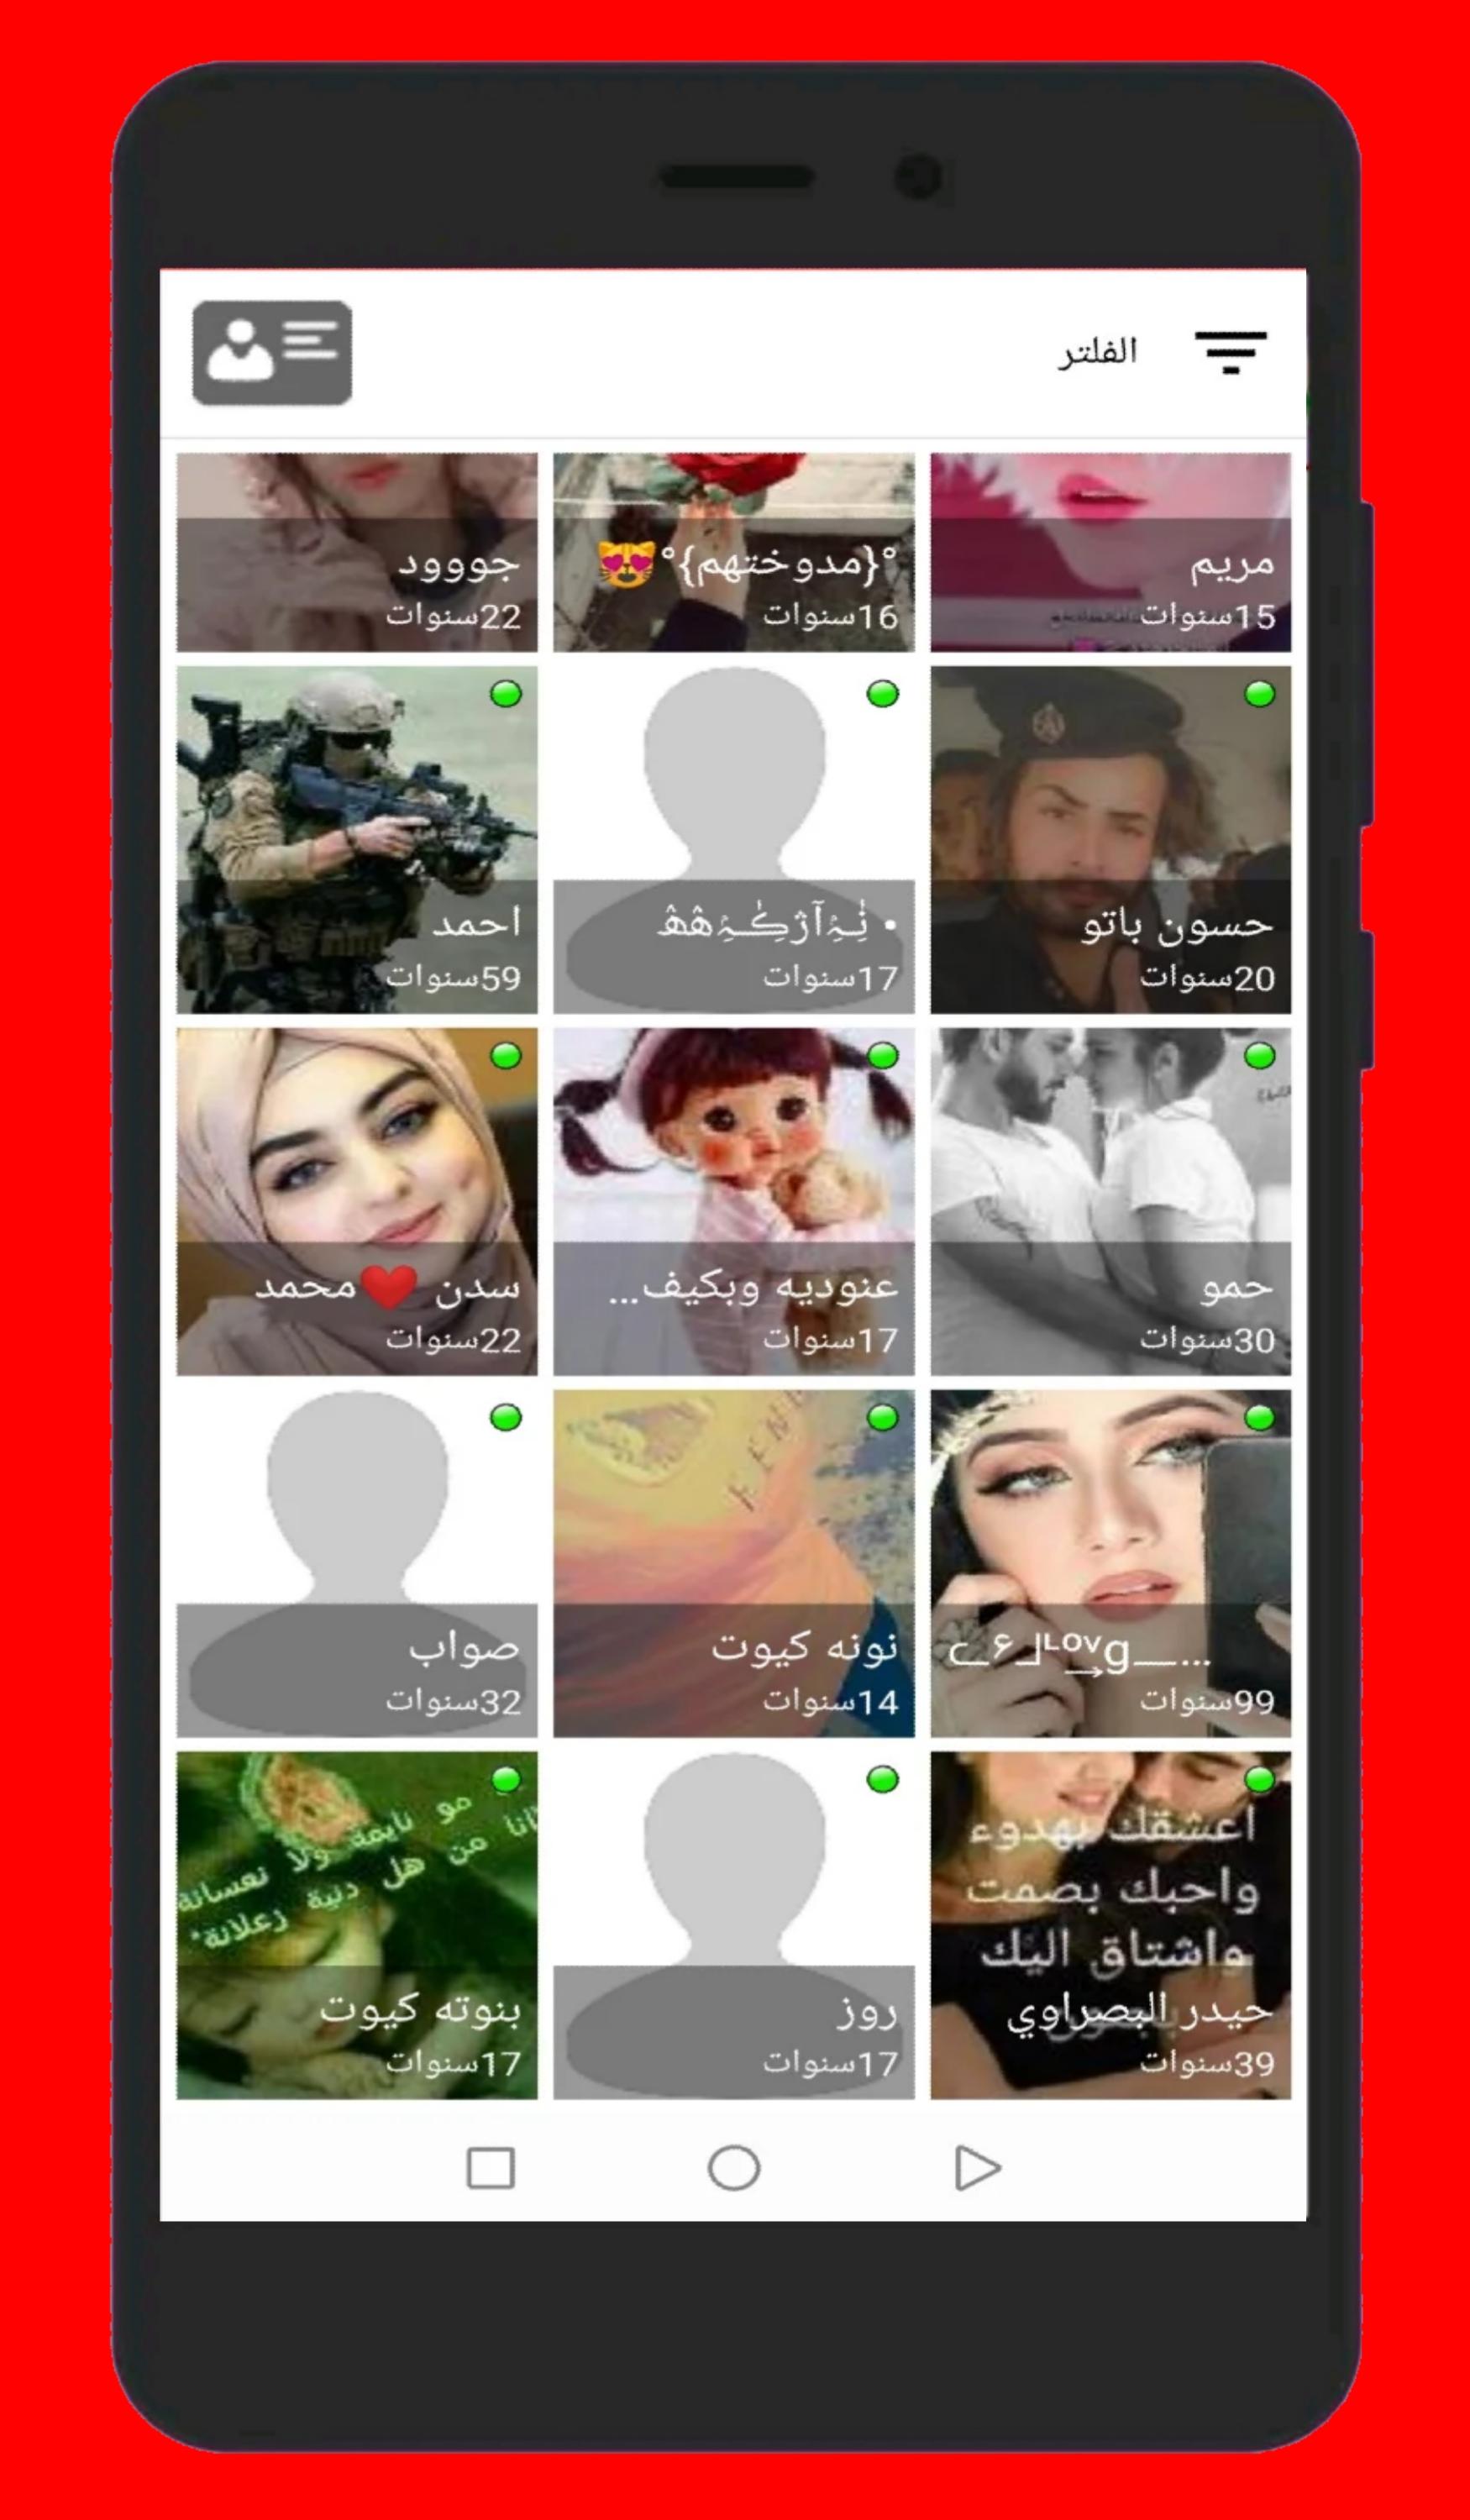 دردشة غلاتي العراق-2021 9.8 Screenshot 1